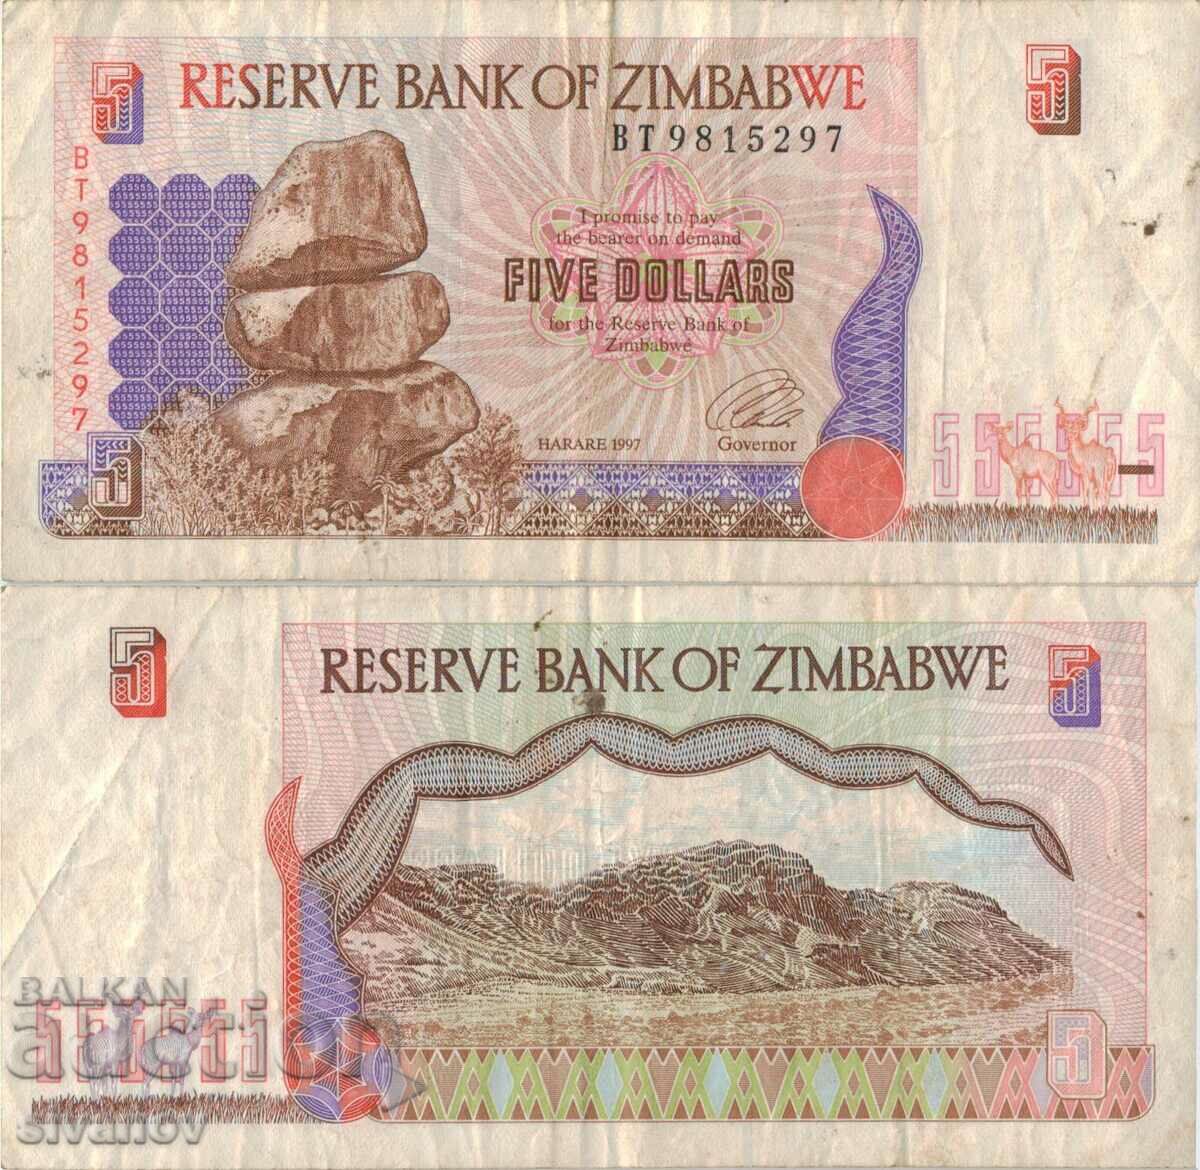 Zimbabwe $5 1997 Banknote #5160